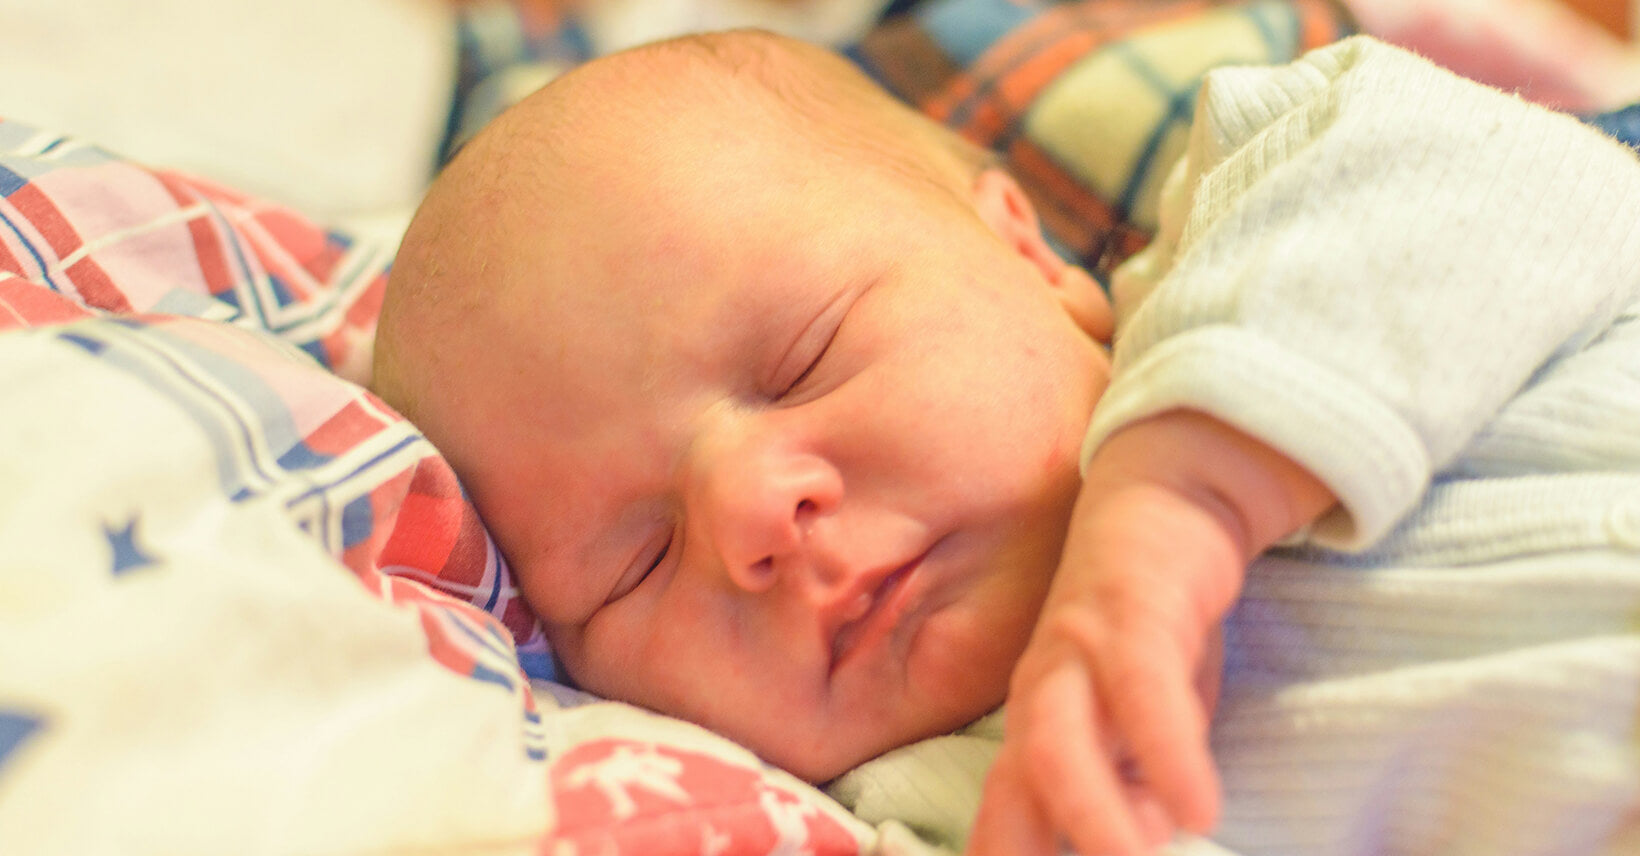 When Do Babies Typically Sleep Through the Night?